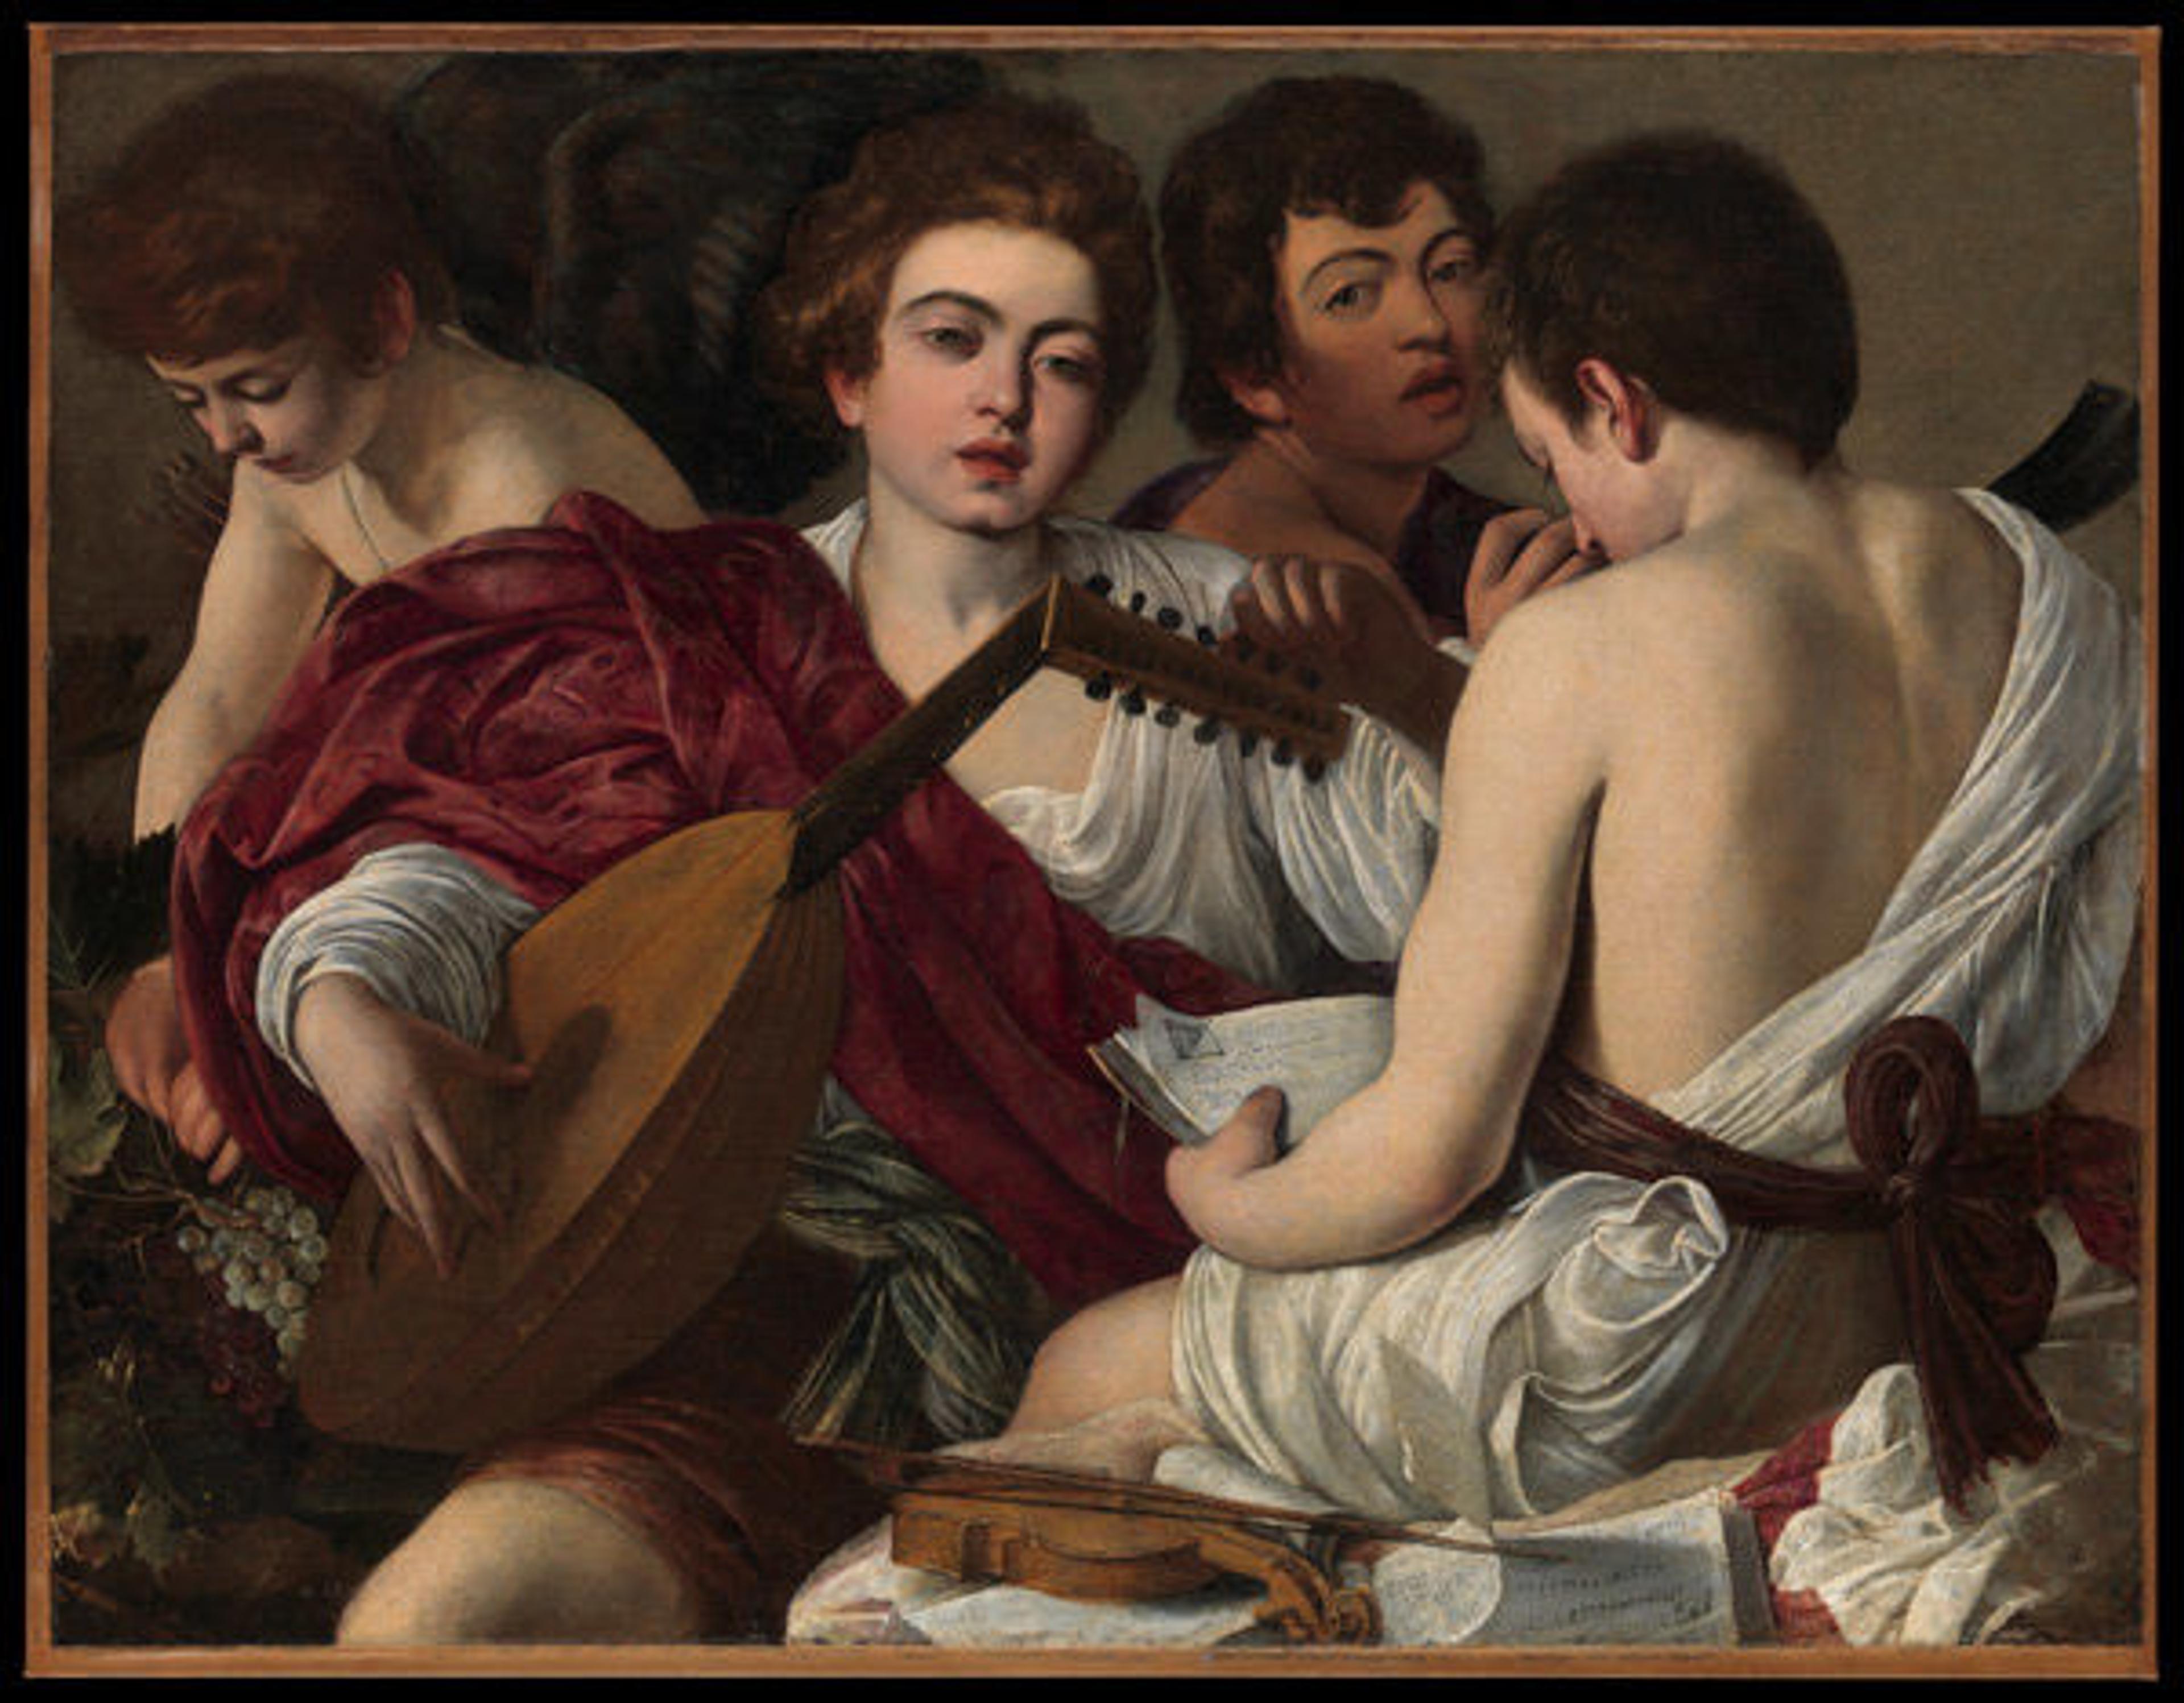 Caravaggio (Michelangelo Merisi) (Italian, 1571–1610) | The Musicians, ca. 1595 | 52.81